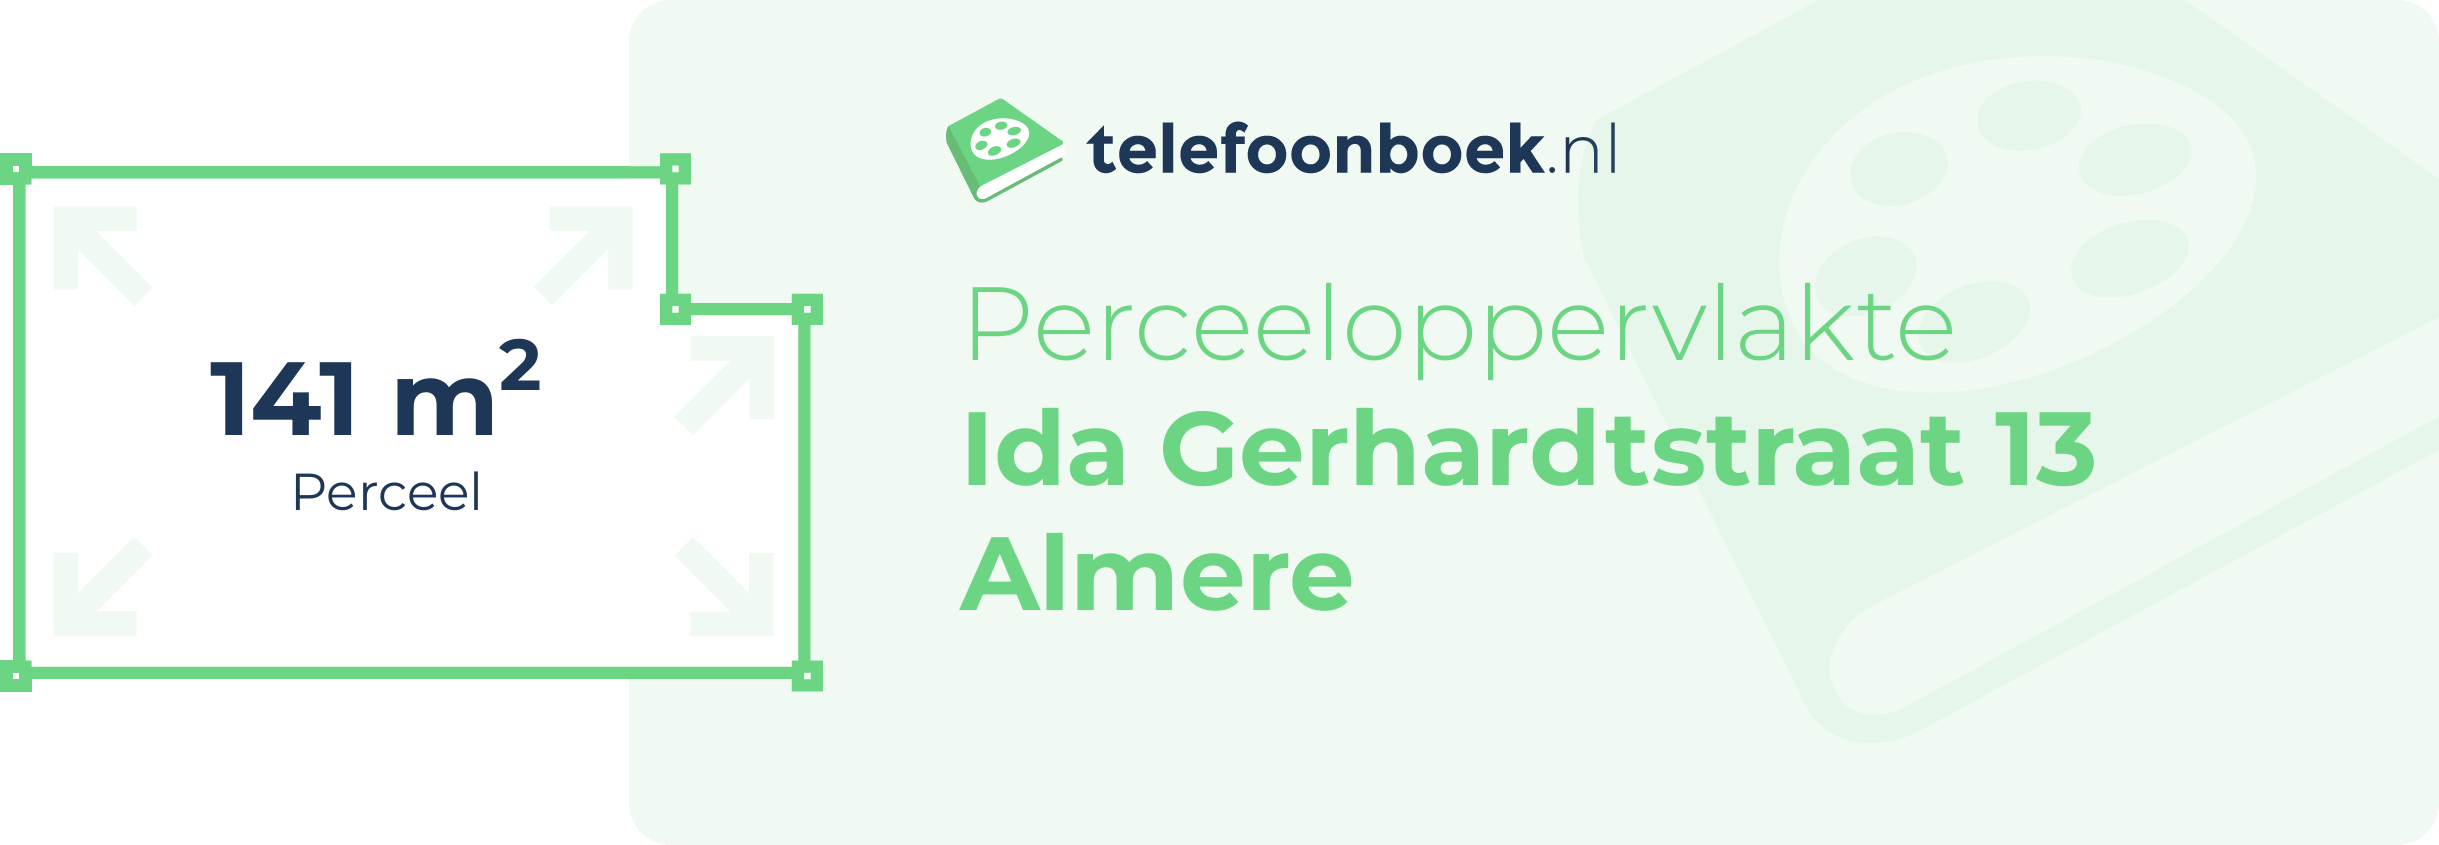 Perceeloppervlakte Ida Gerhardtstraat 13 Almere